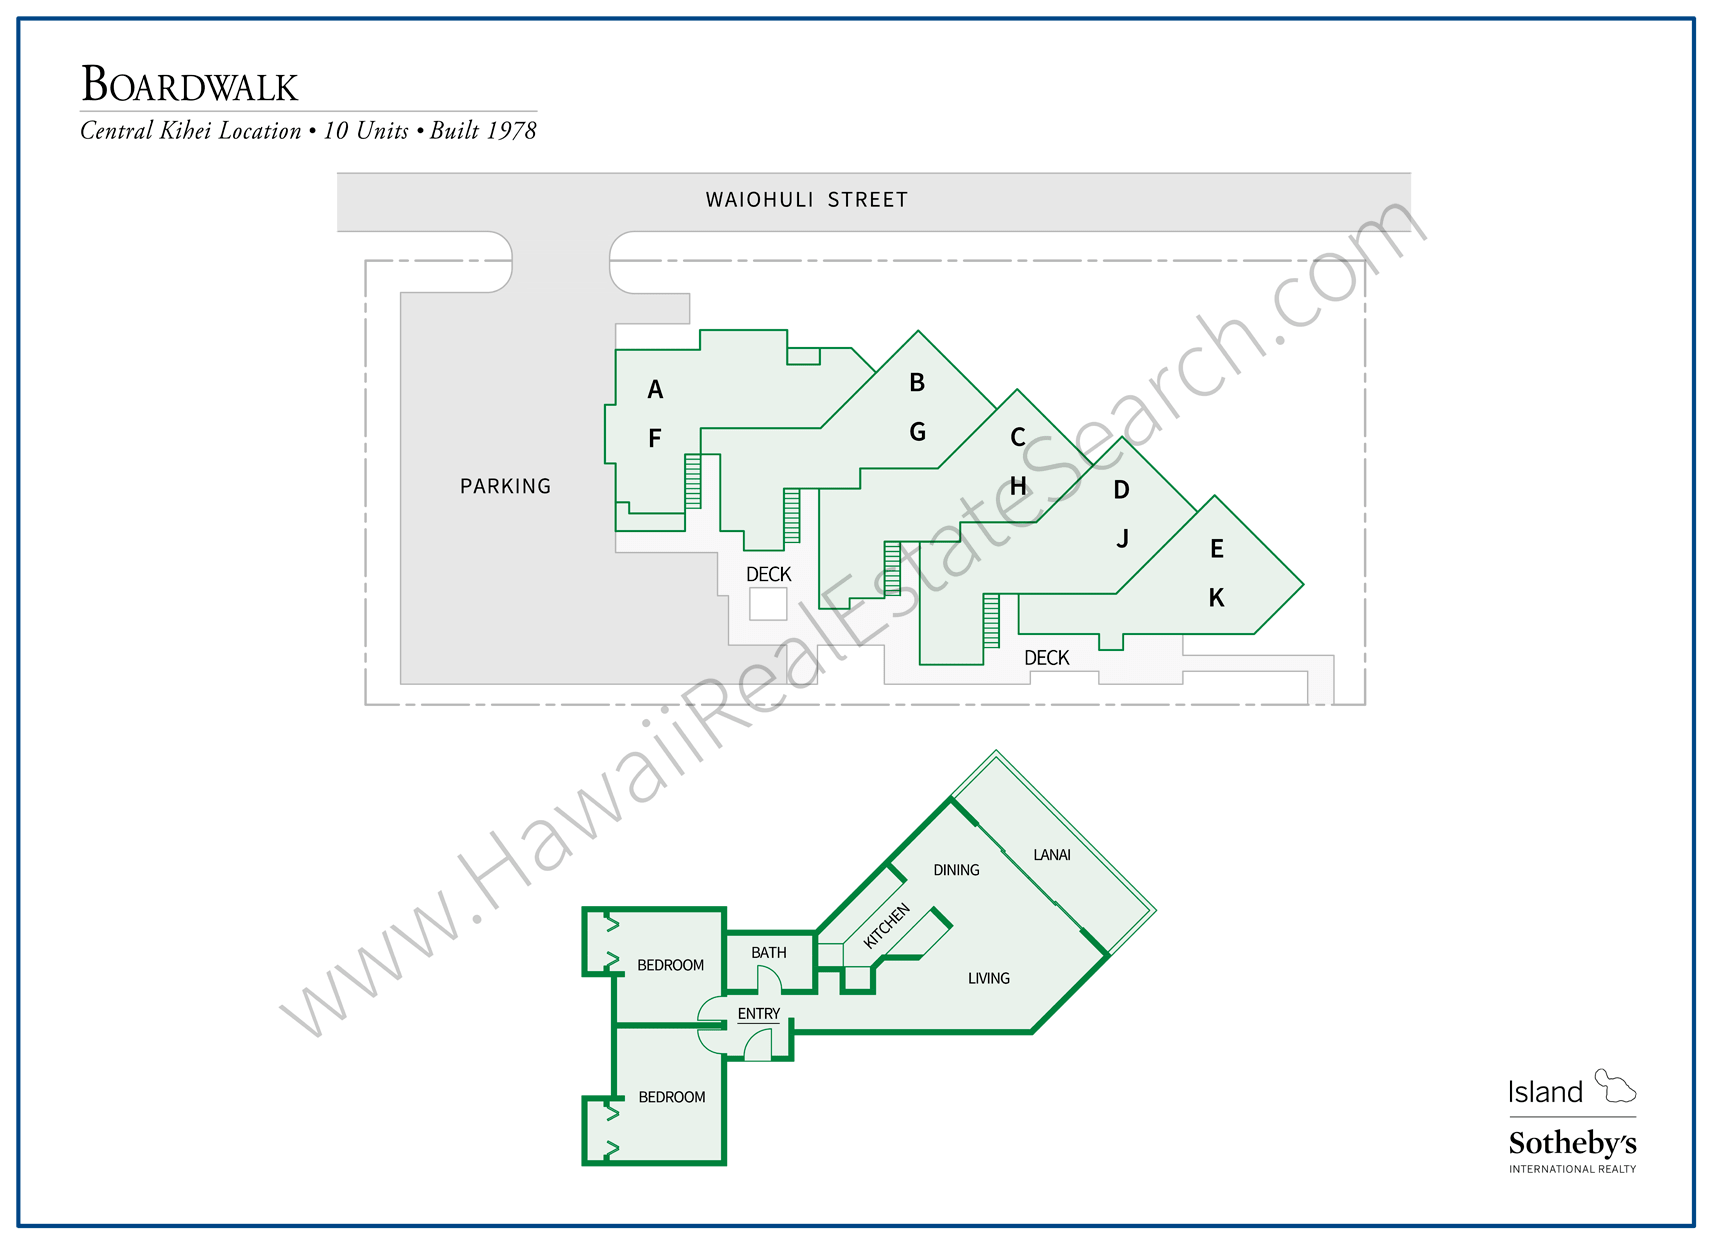 Boardwalk Floor Plan and Map - Kihei